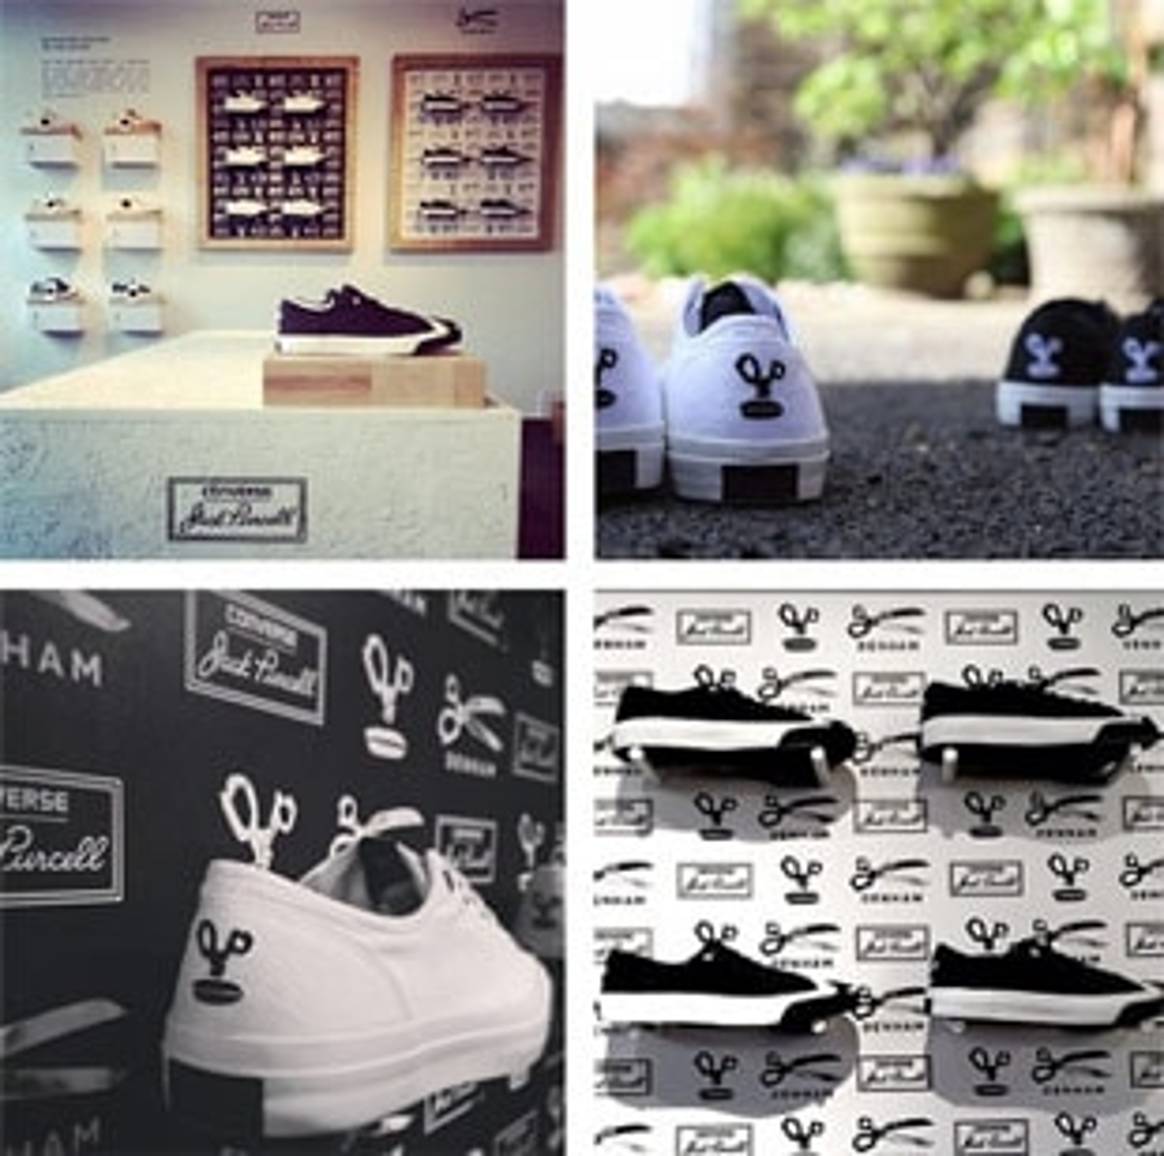 Converse and Denham launch first collaborative sneaker